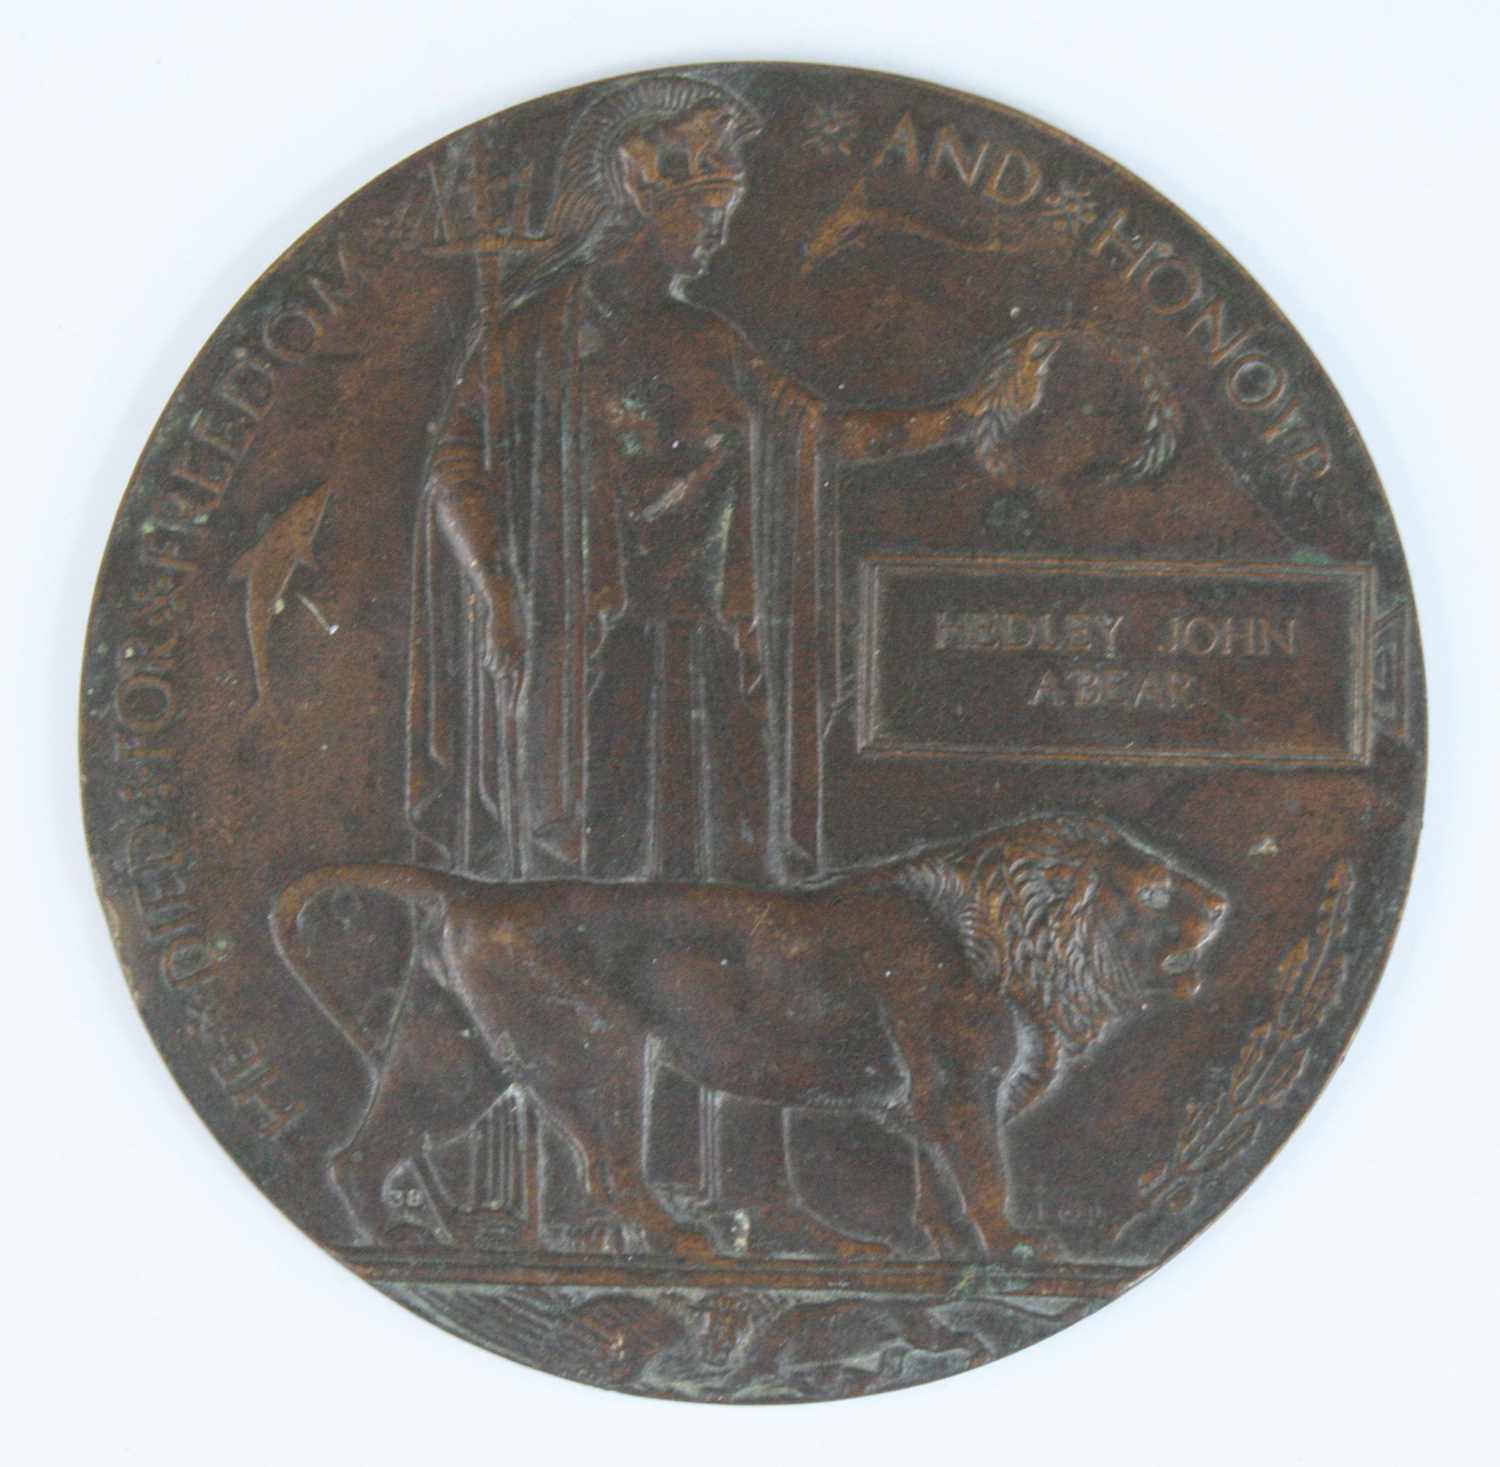 A WW I bronze memorial plaque, naming Hedley John A'Bear. Captain A'Bear Queen's (Royal West